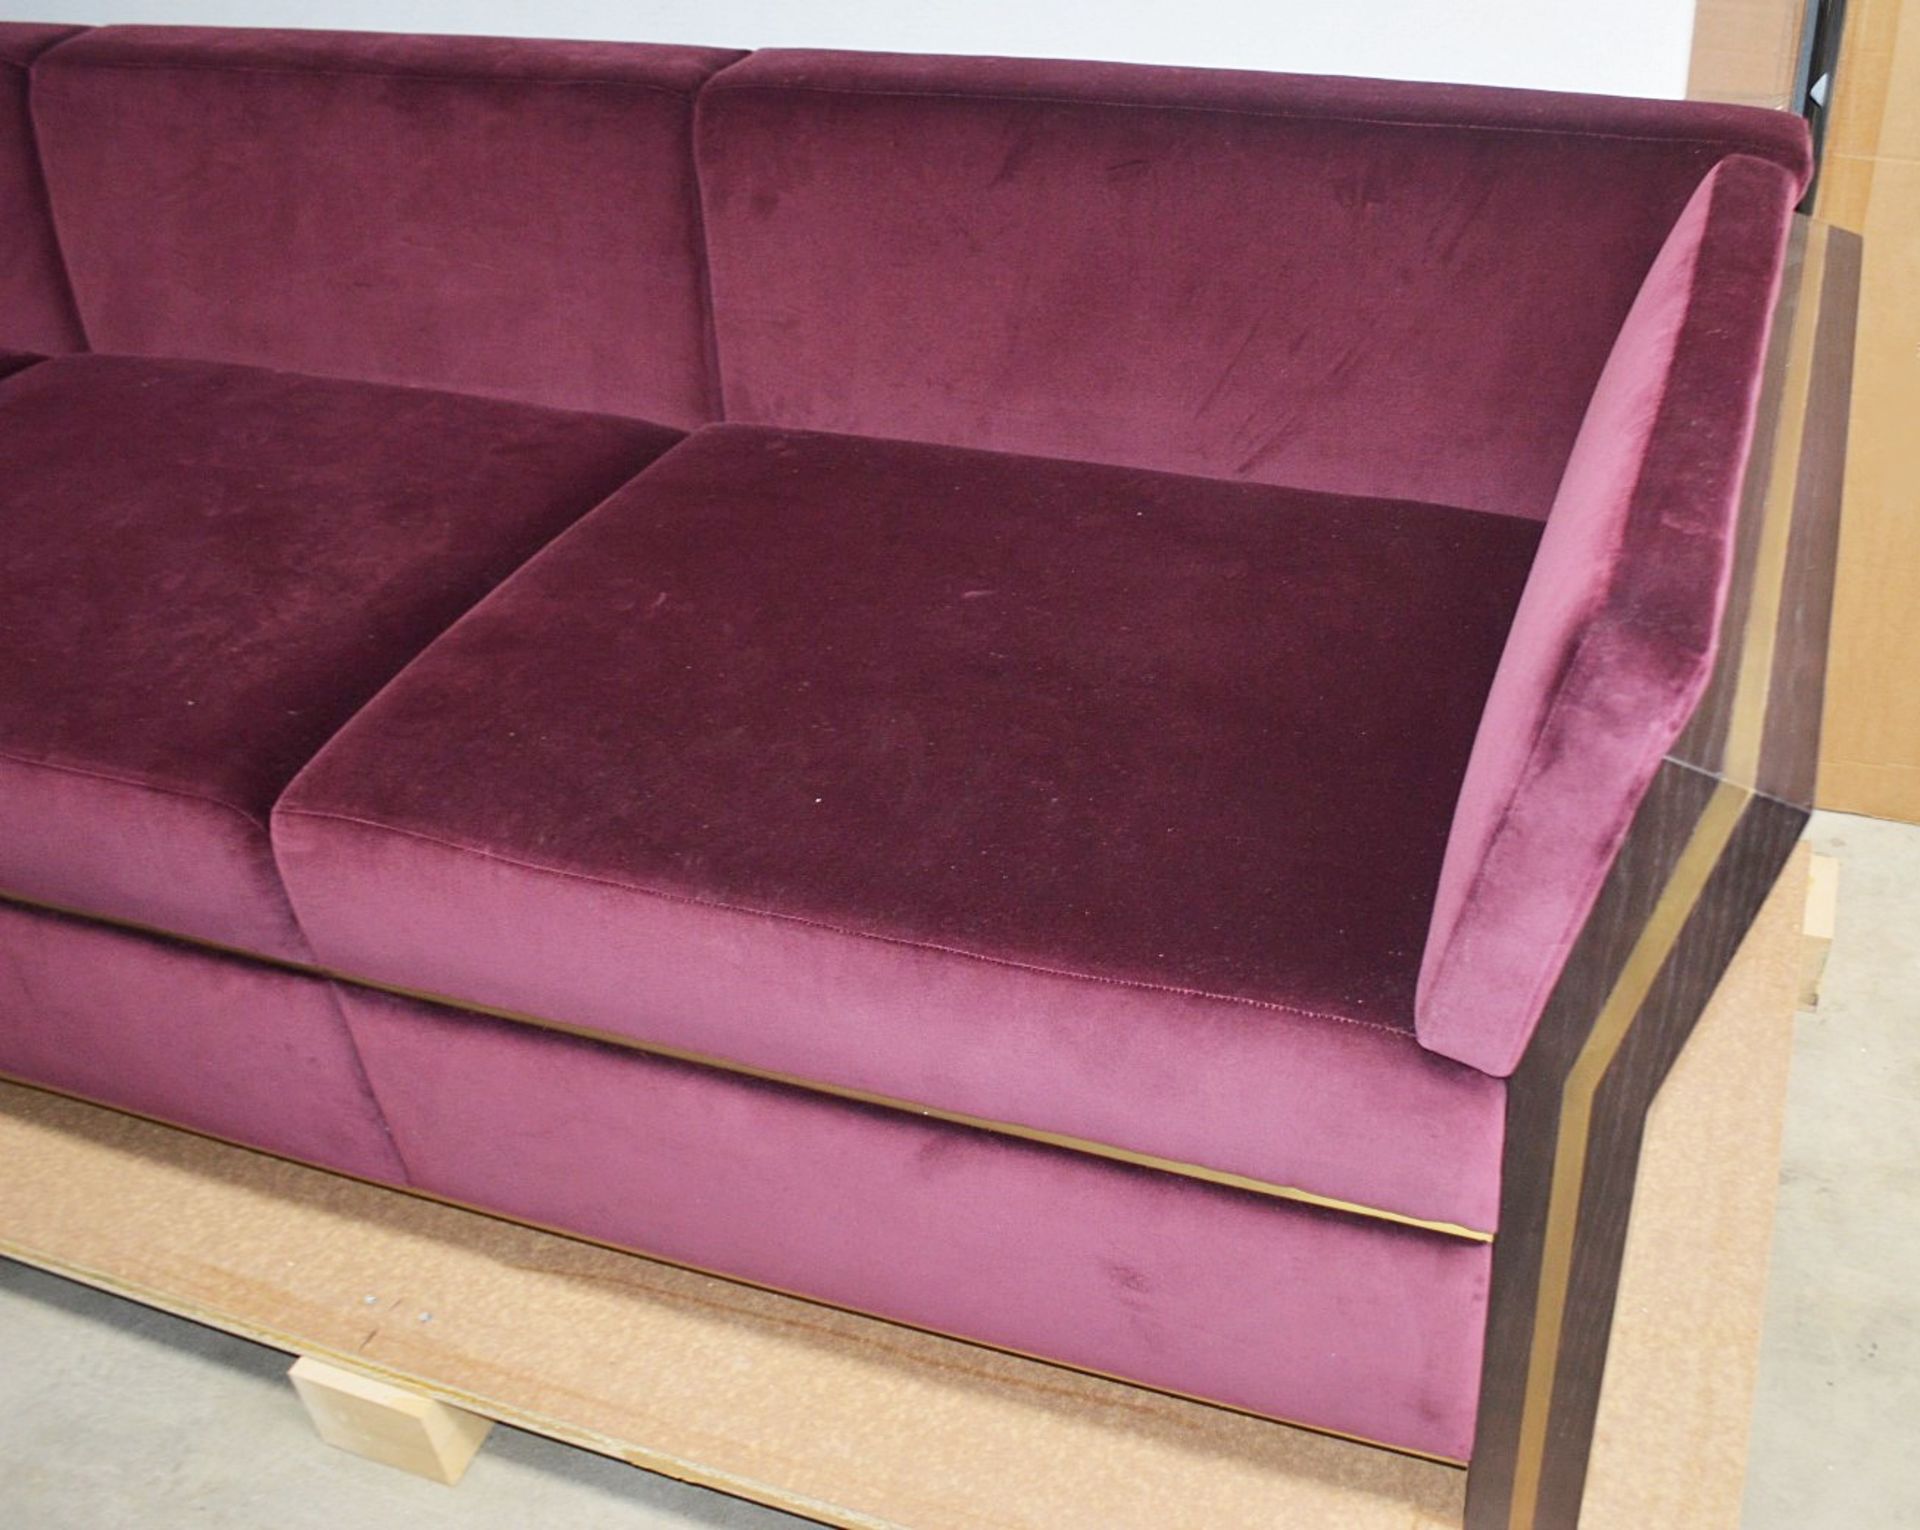 1 x FRATO 'Udaipur' 3 Seater Sofa With Custom Burgundy Velvet Upholstery - Original RRP £8,040 - Image 4 of 8